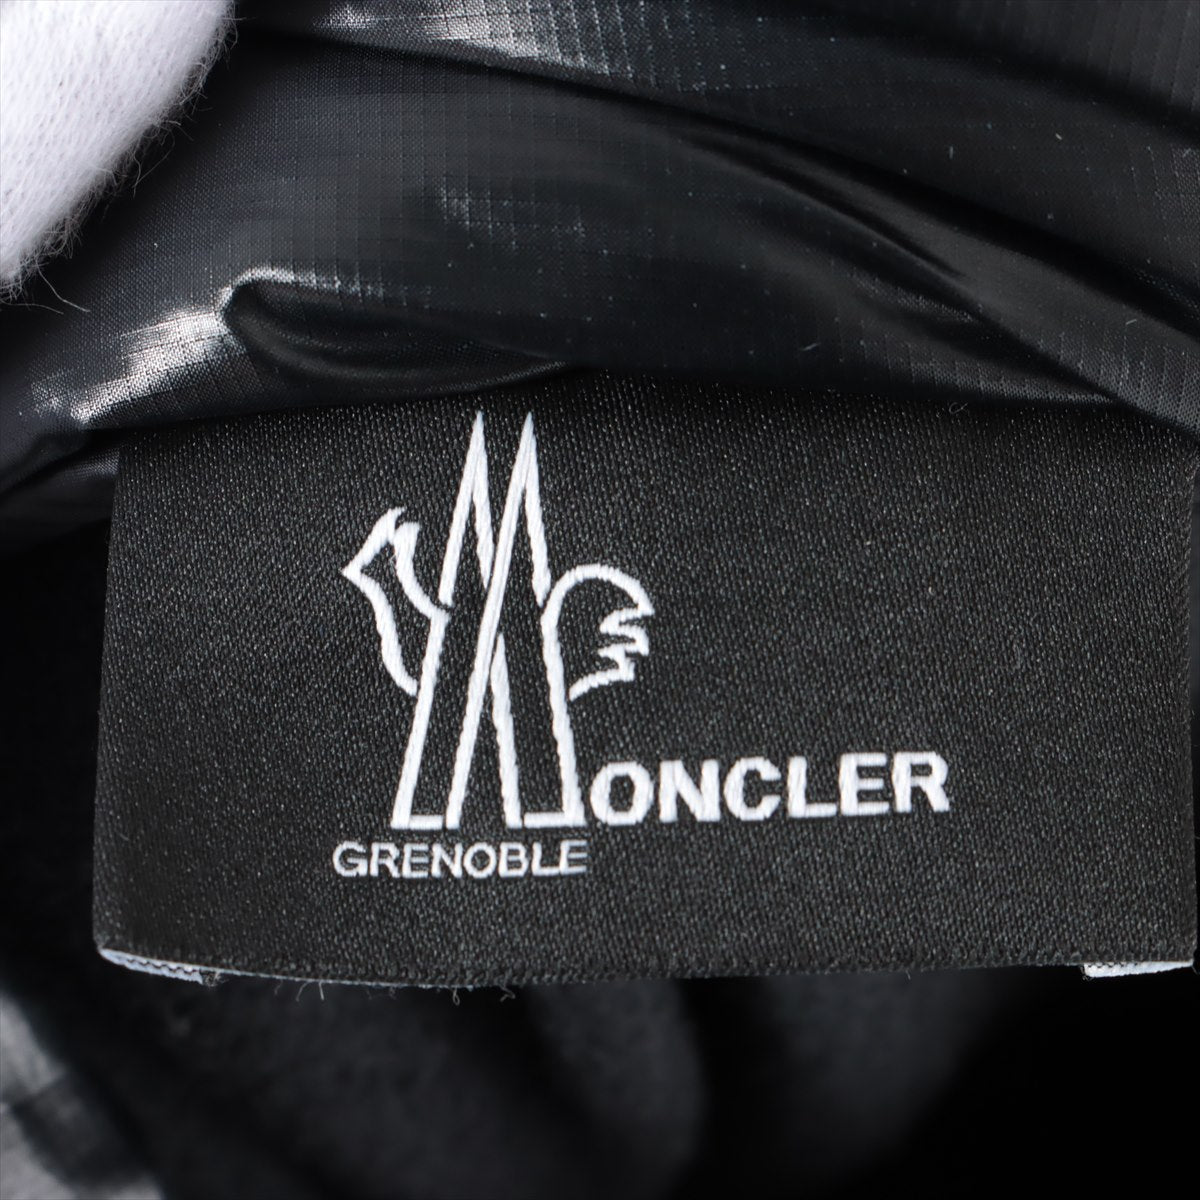 Moncler Grenoble 21 years Polyester & nylon Down jacket M Men's Black  Hoody